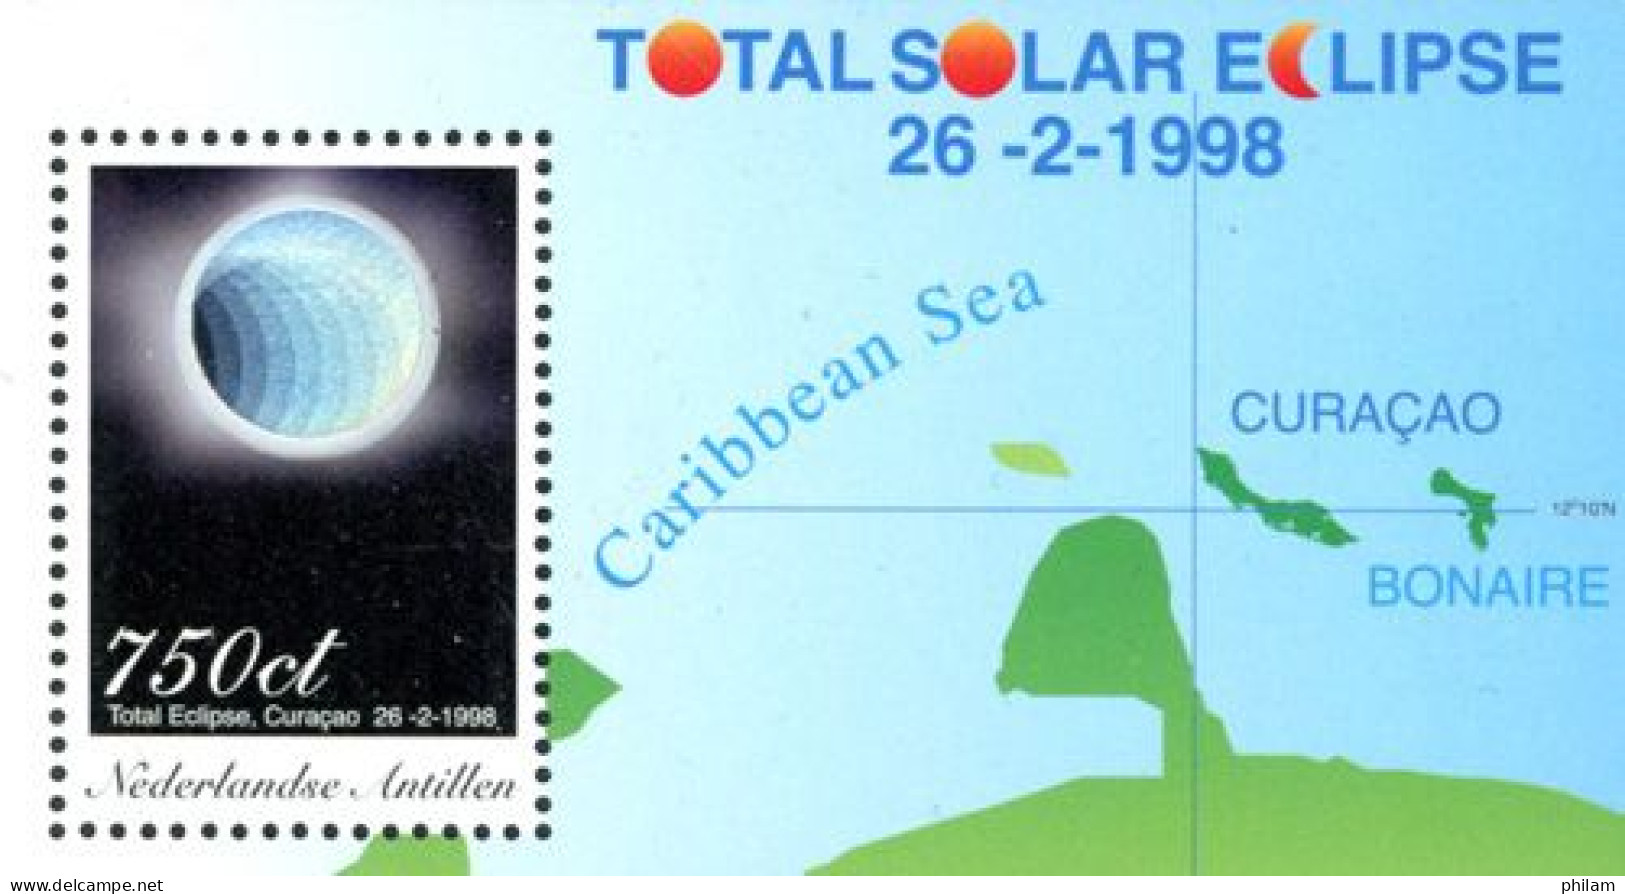 ANTILLES NEERLANDAISES 1998 - Eclipse Solaire -  Hologramme -1 BF - Curacao, Netherlands Antilles, Aruba